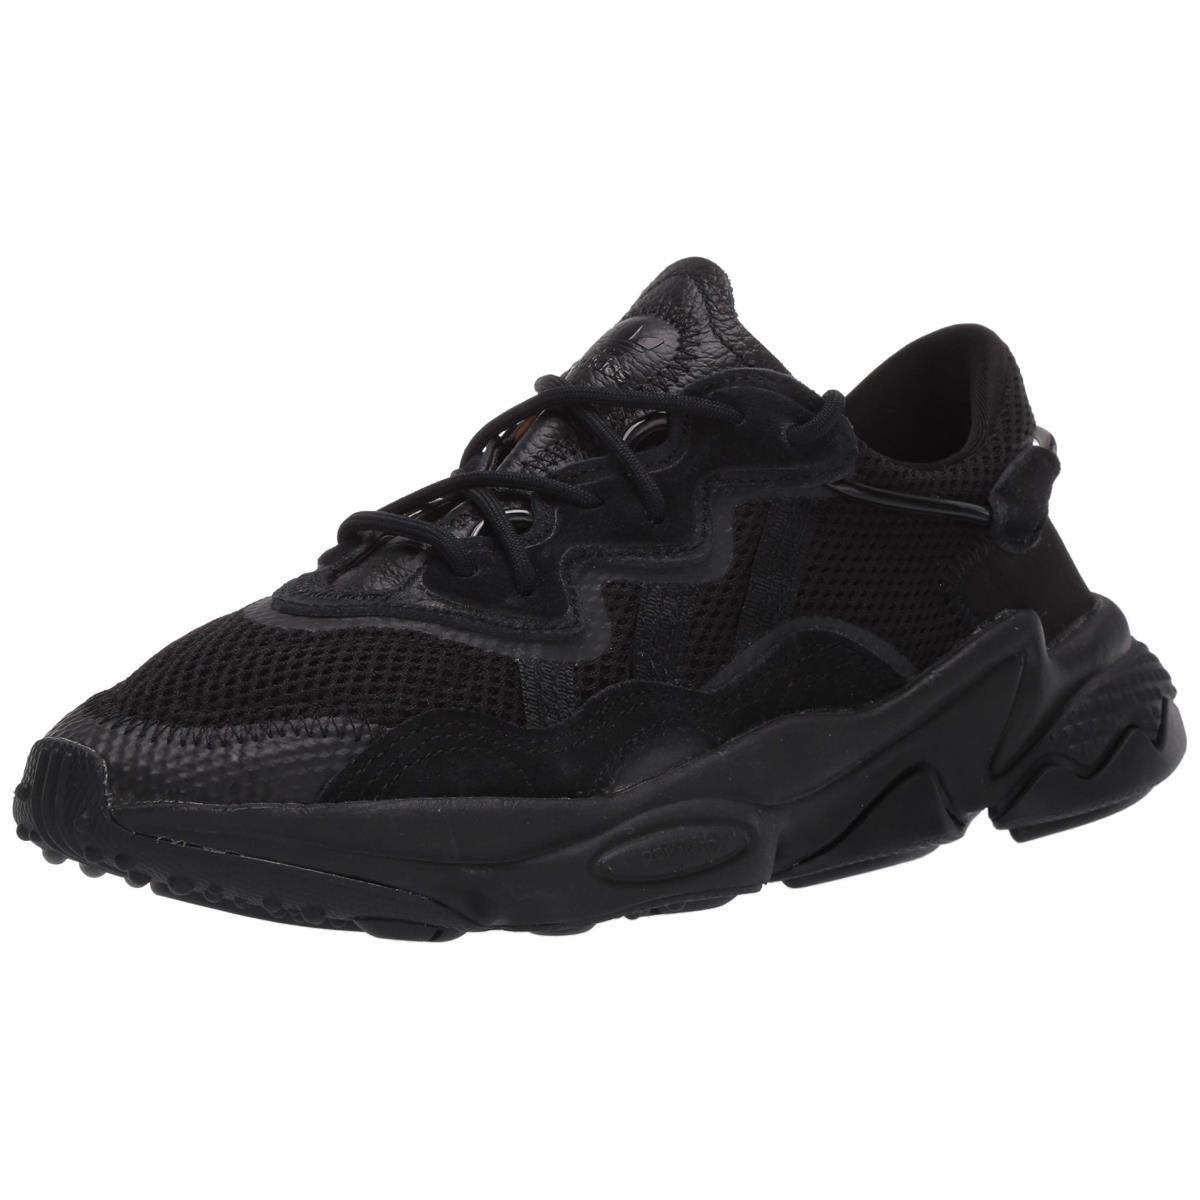 Adidas Unisex-child Ozweego Sneaker Black/Black/Trace Grey Metallic